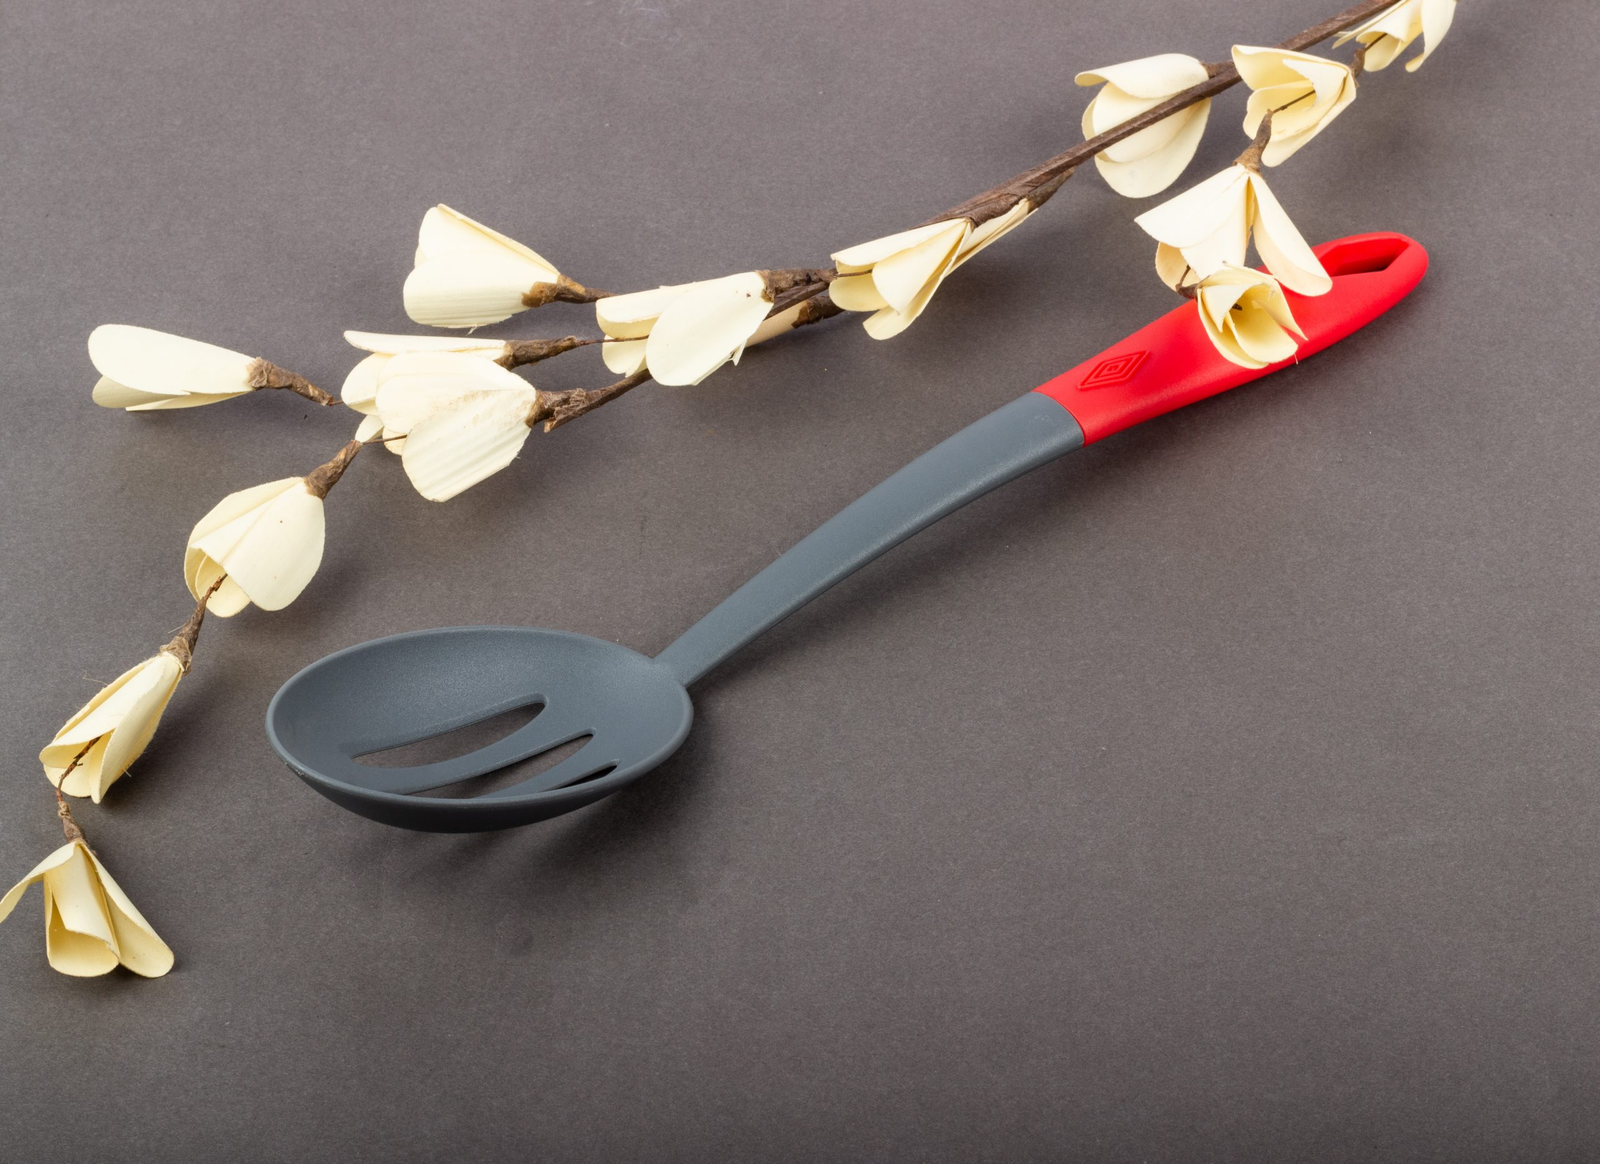 Marte wok spatula and ladle,skimmer slotted spoon set - asian wok